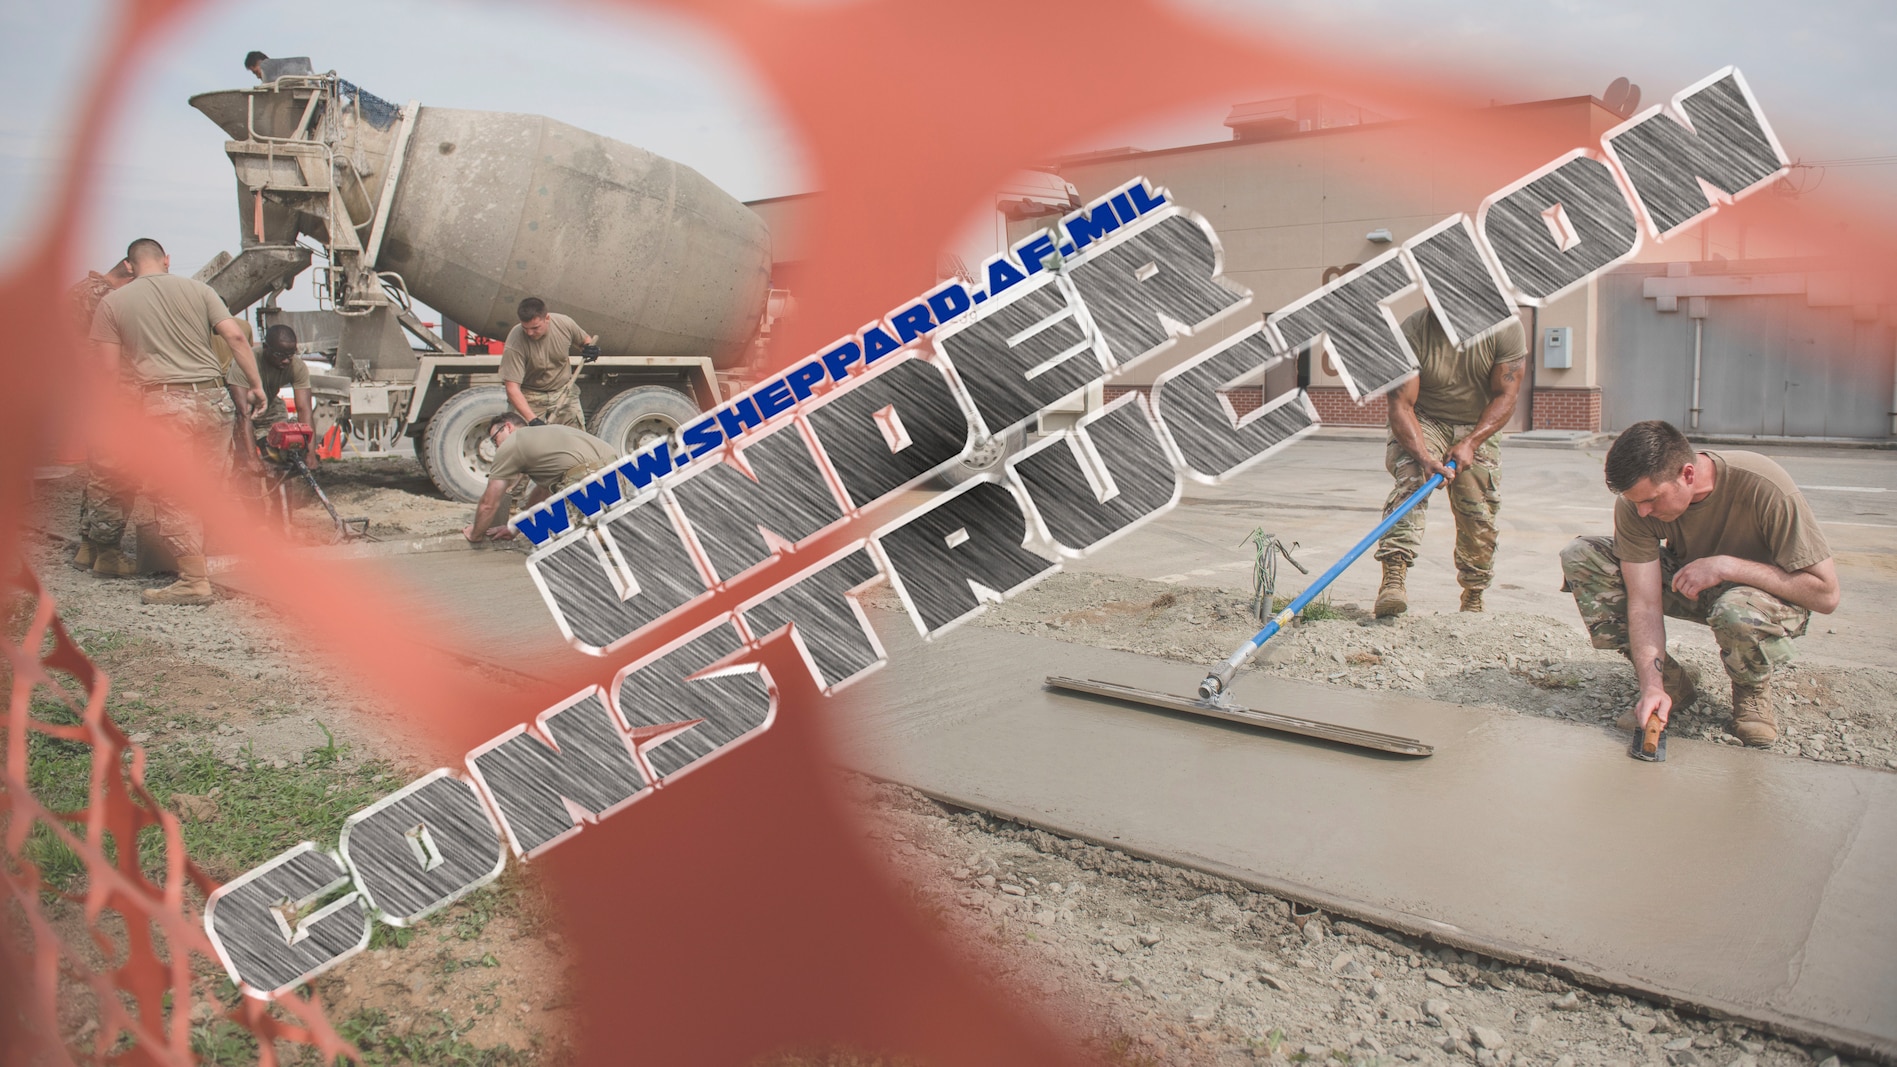 Under Construction website graphic